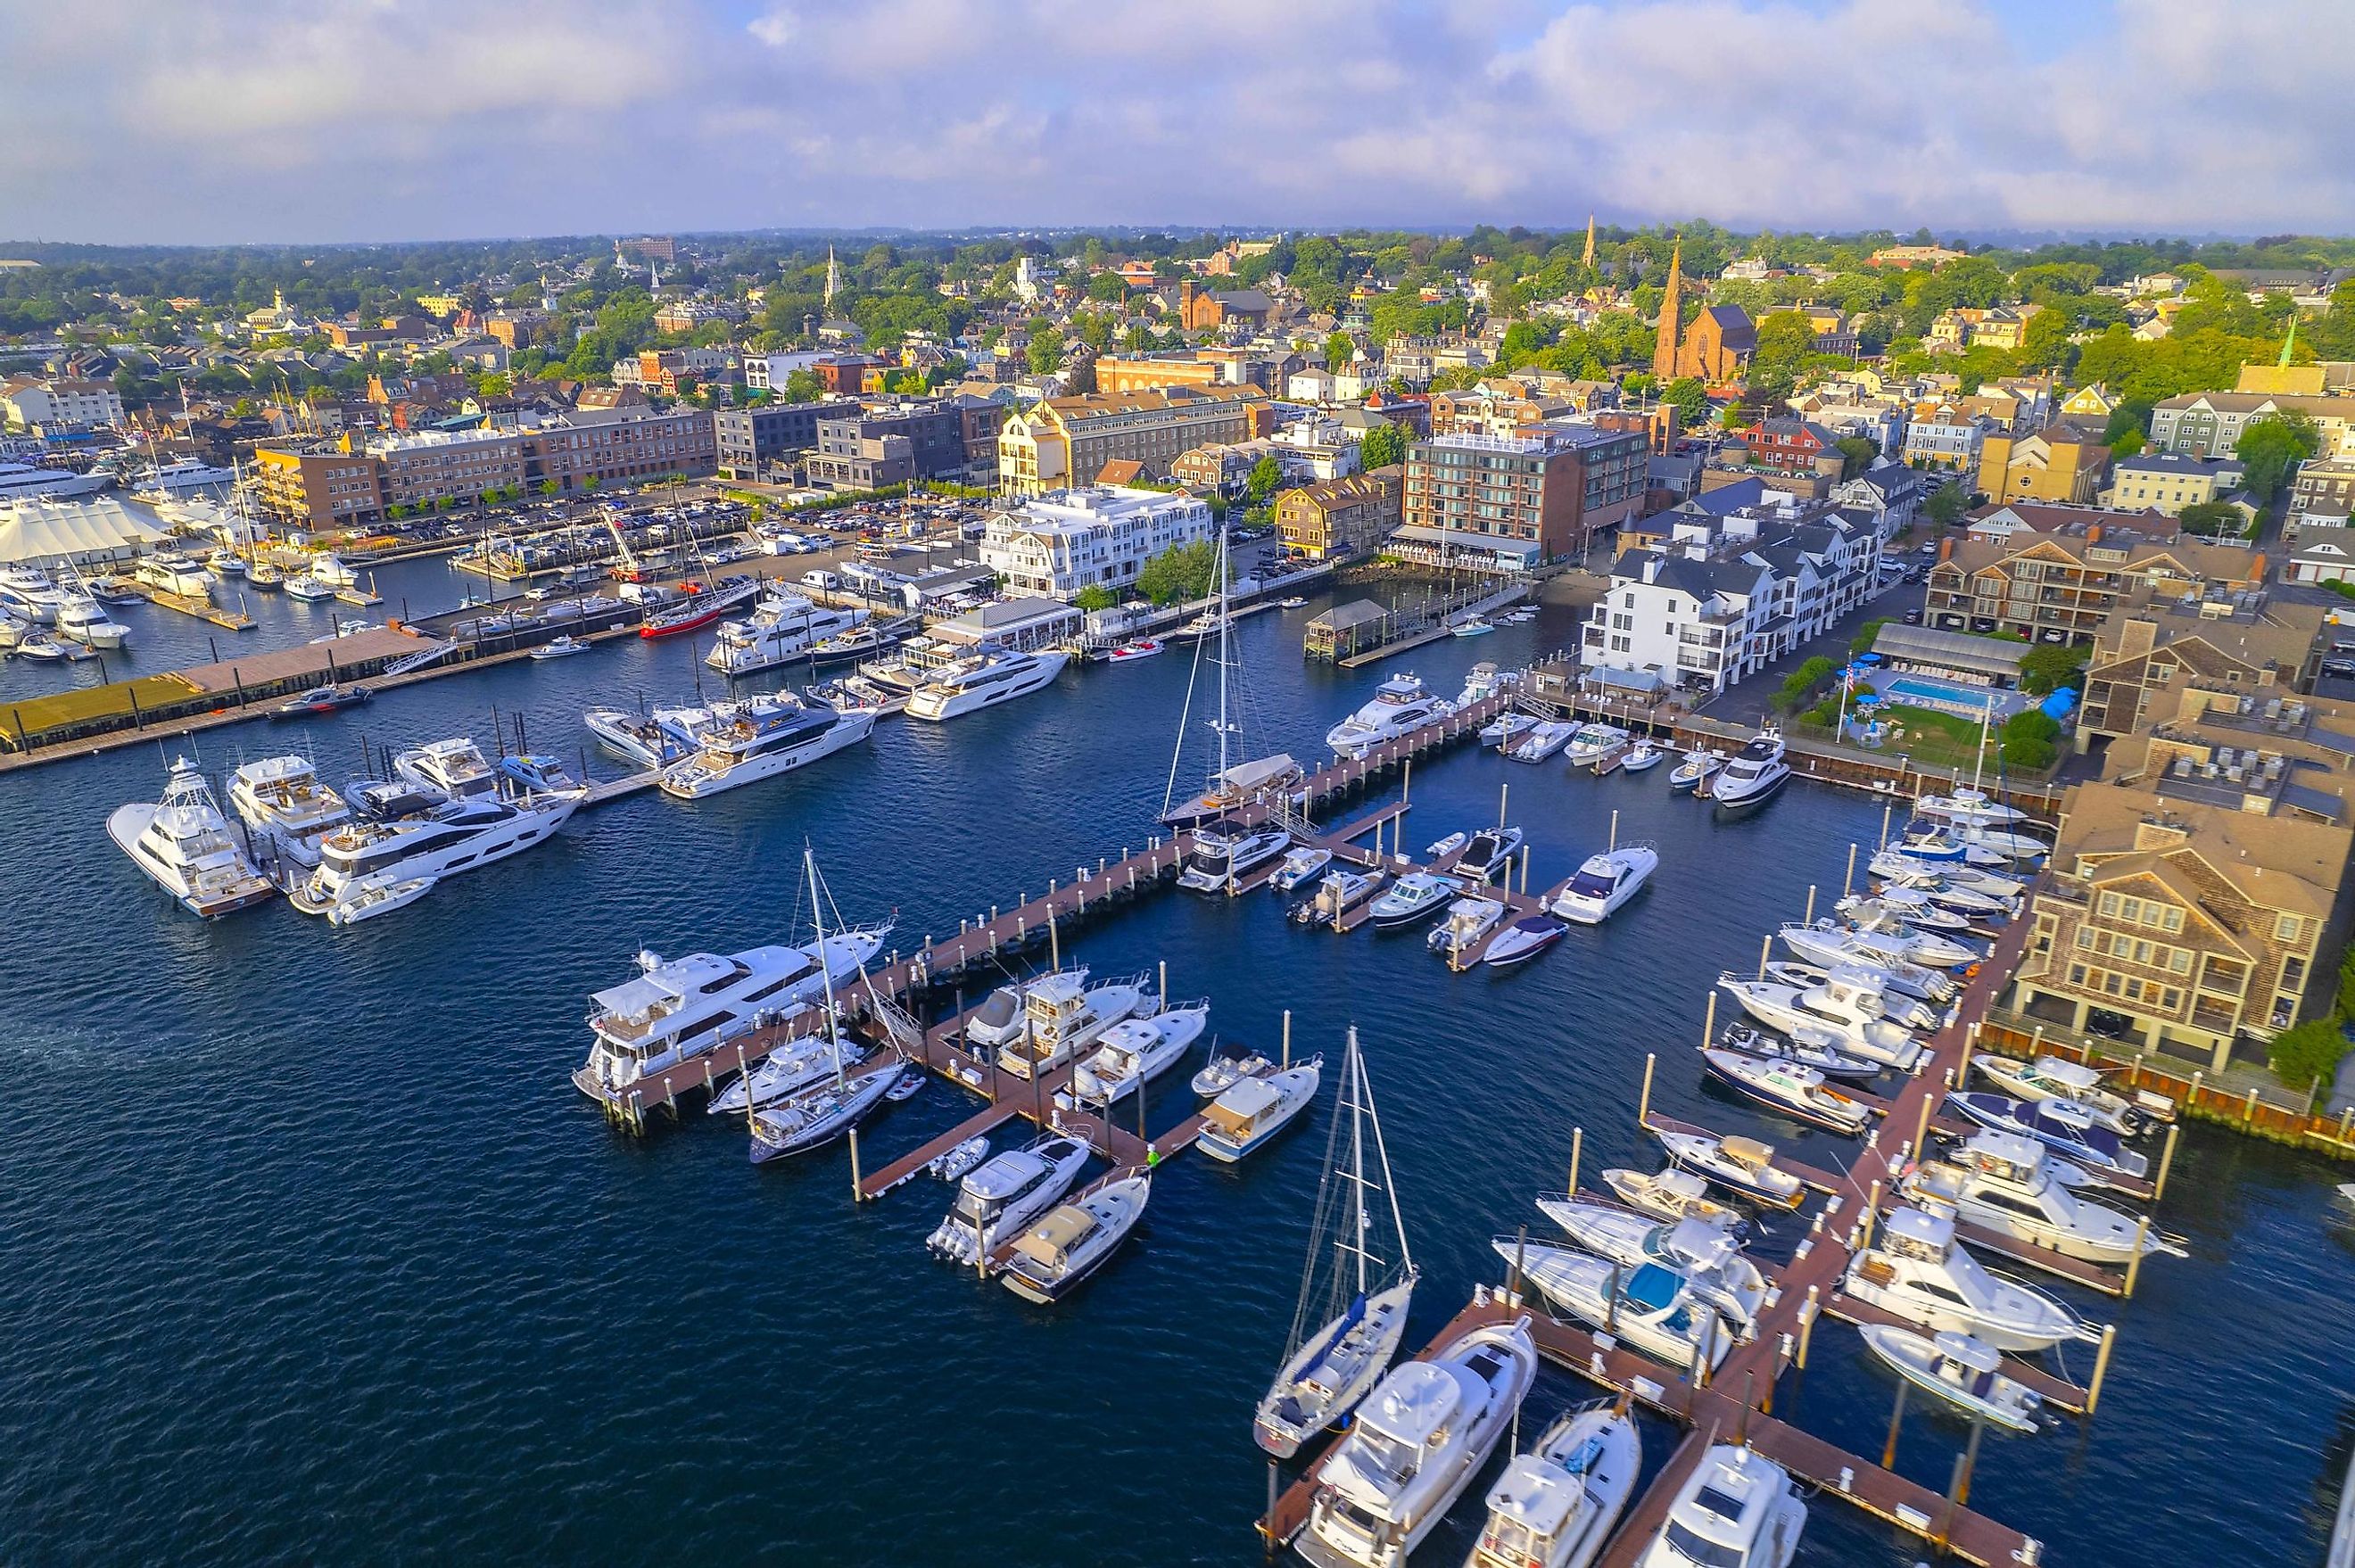 Aerial view of Newoport, Rhode Island.